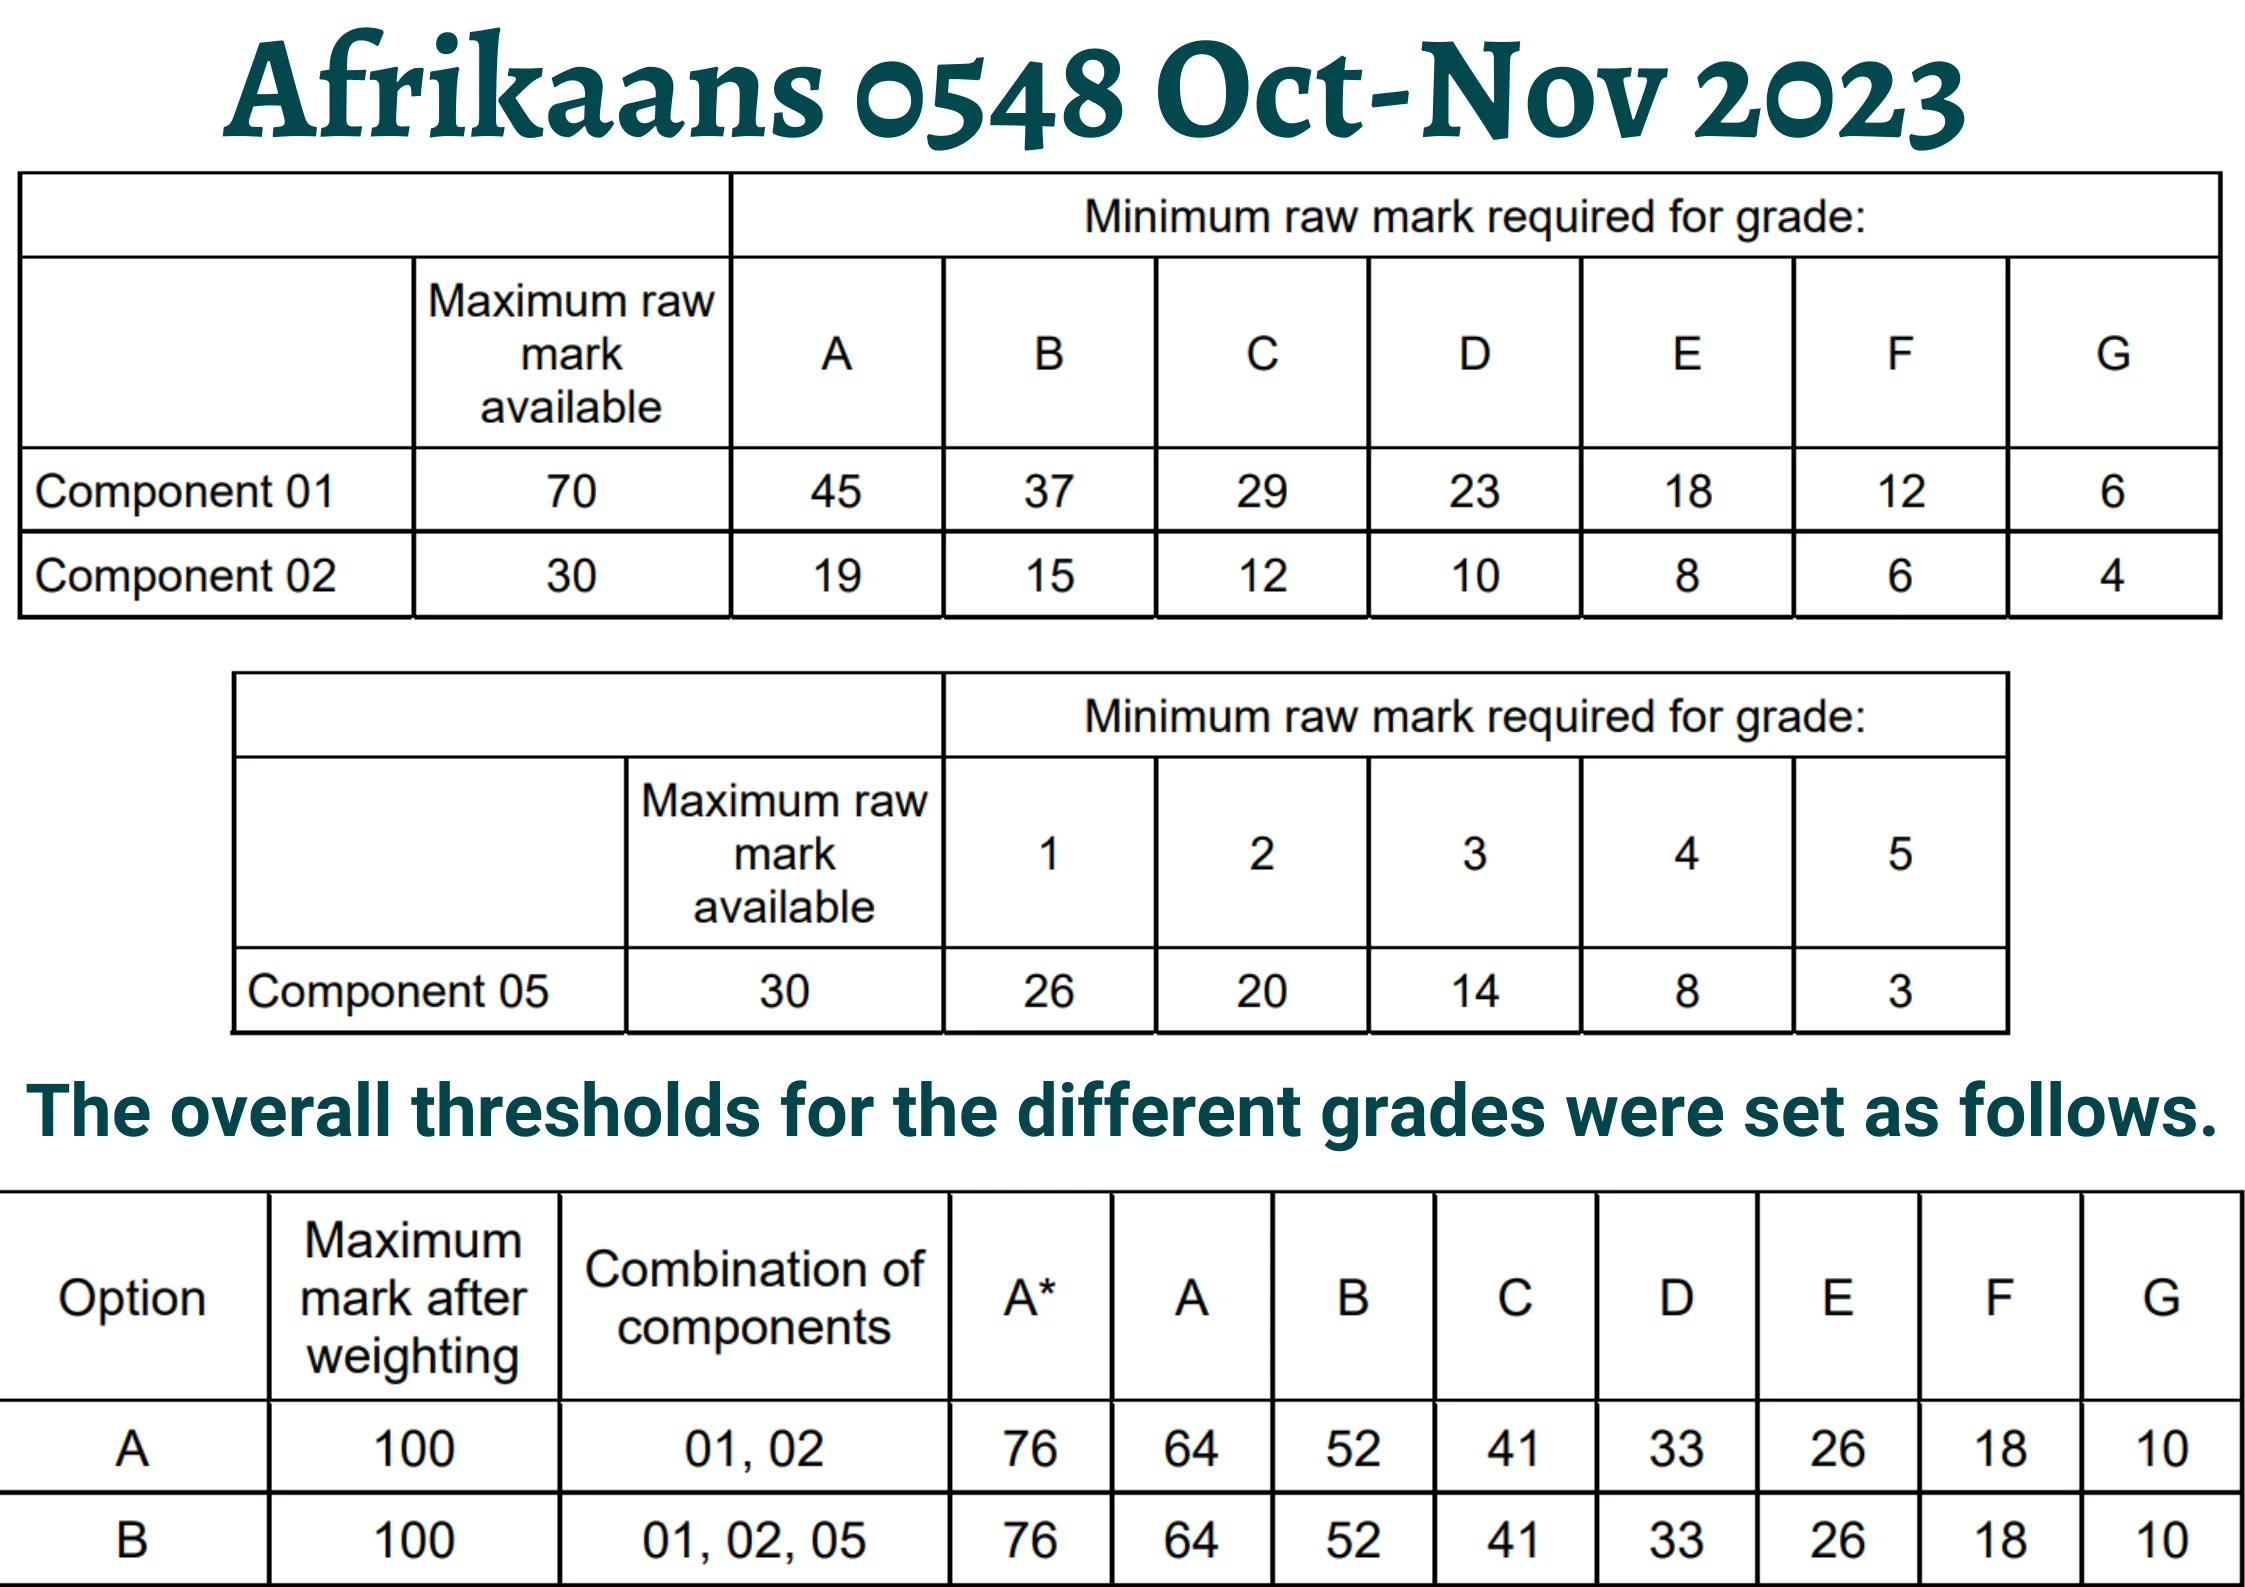 Afrikaans 0548 Oct-Nov 2023 GT